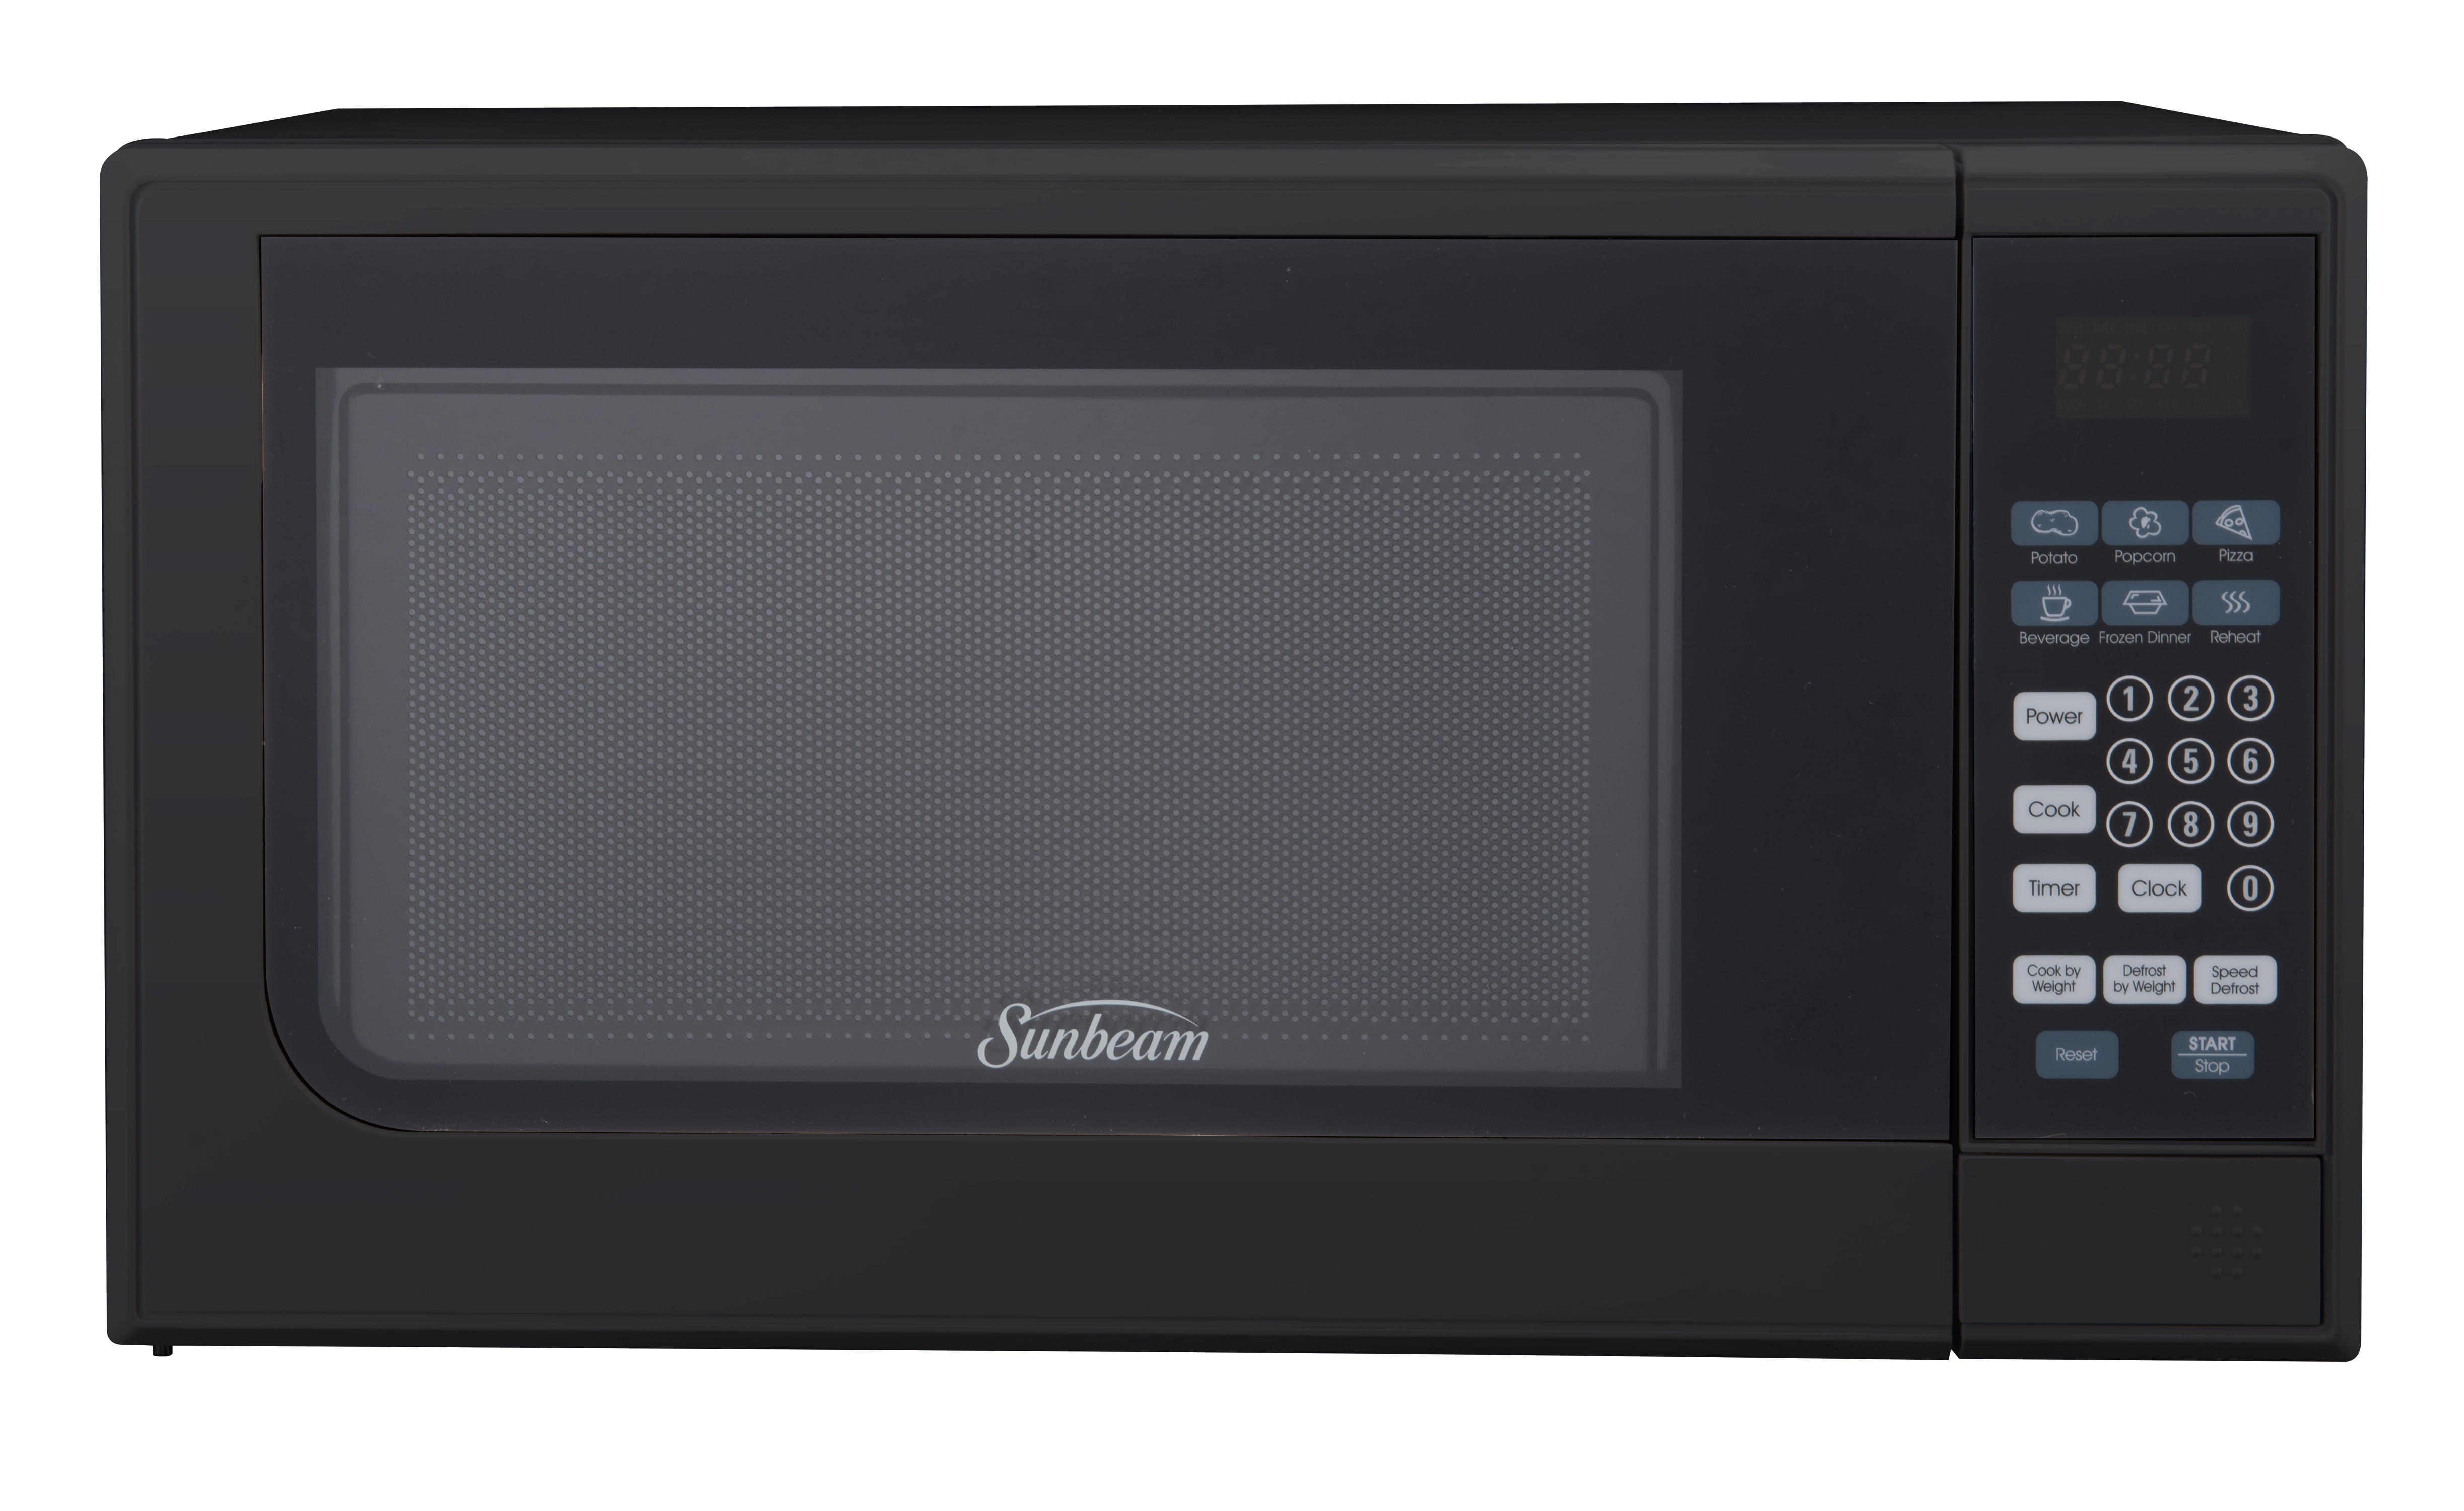 💥NIB Sunbeam 0.7 cu ft 700 Watt Microwave Oven - Black SGCMV807BK